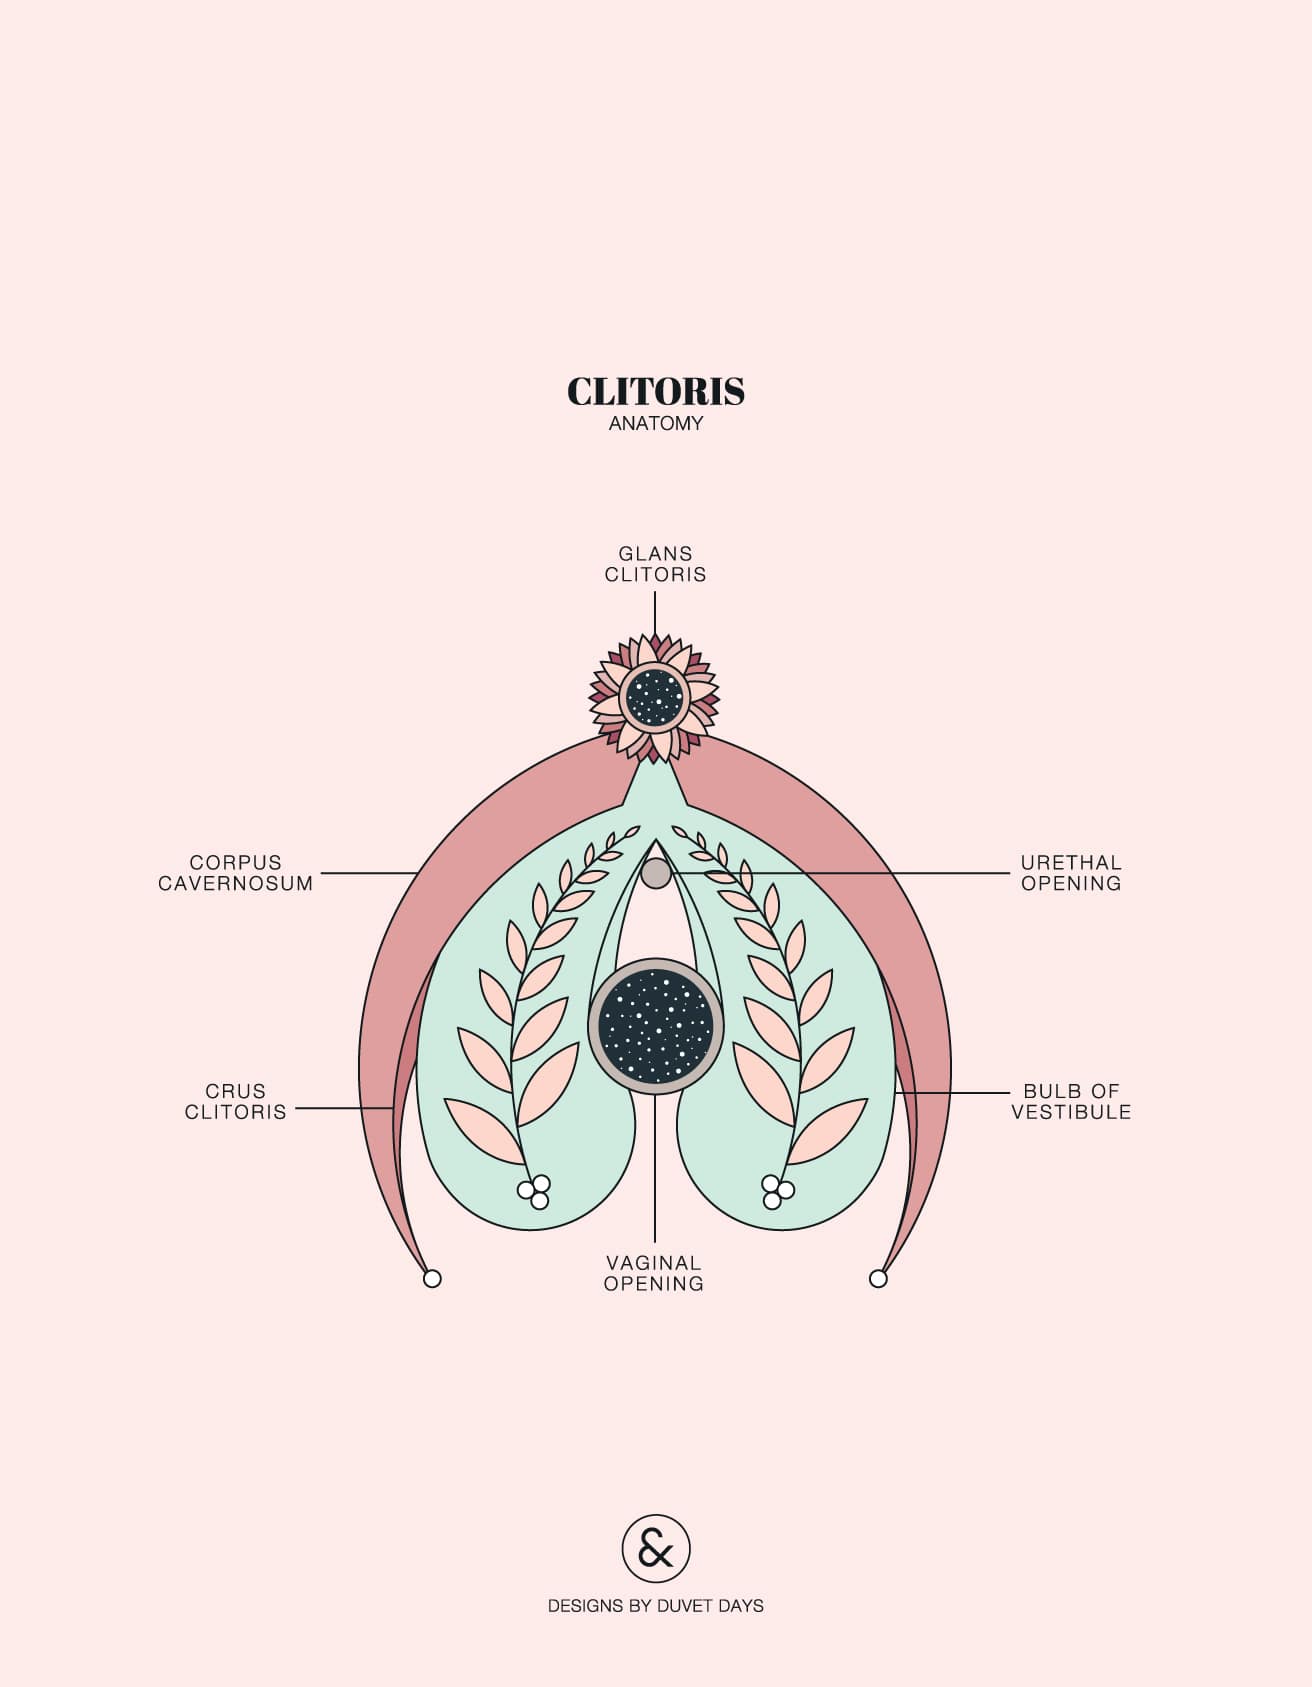 Clitoris Anatomy - Designs by Duvet Days Anatomy Illustrations